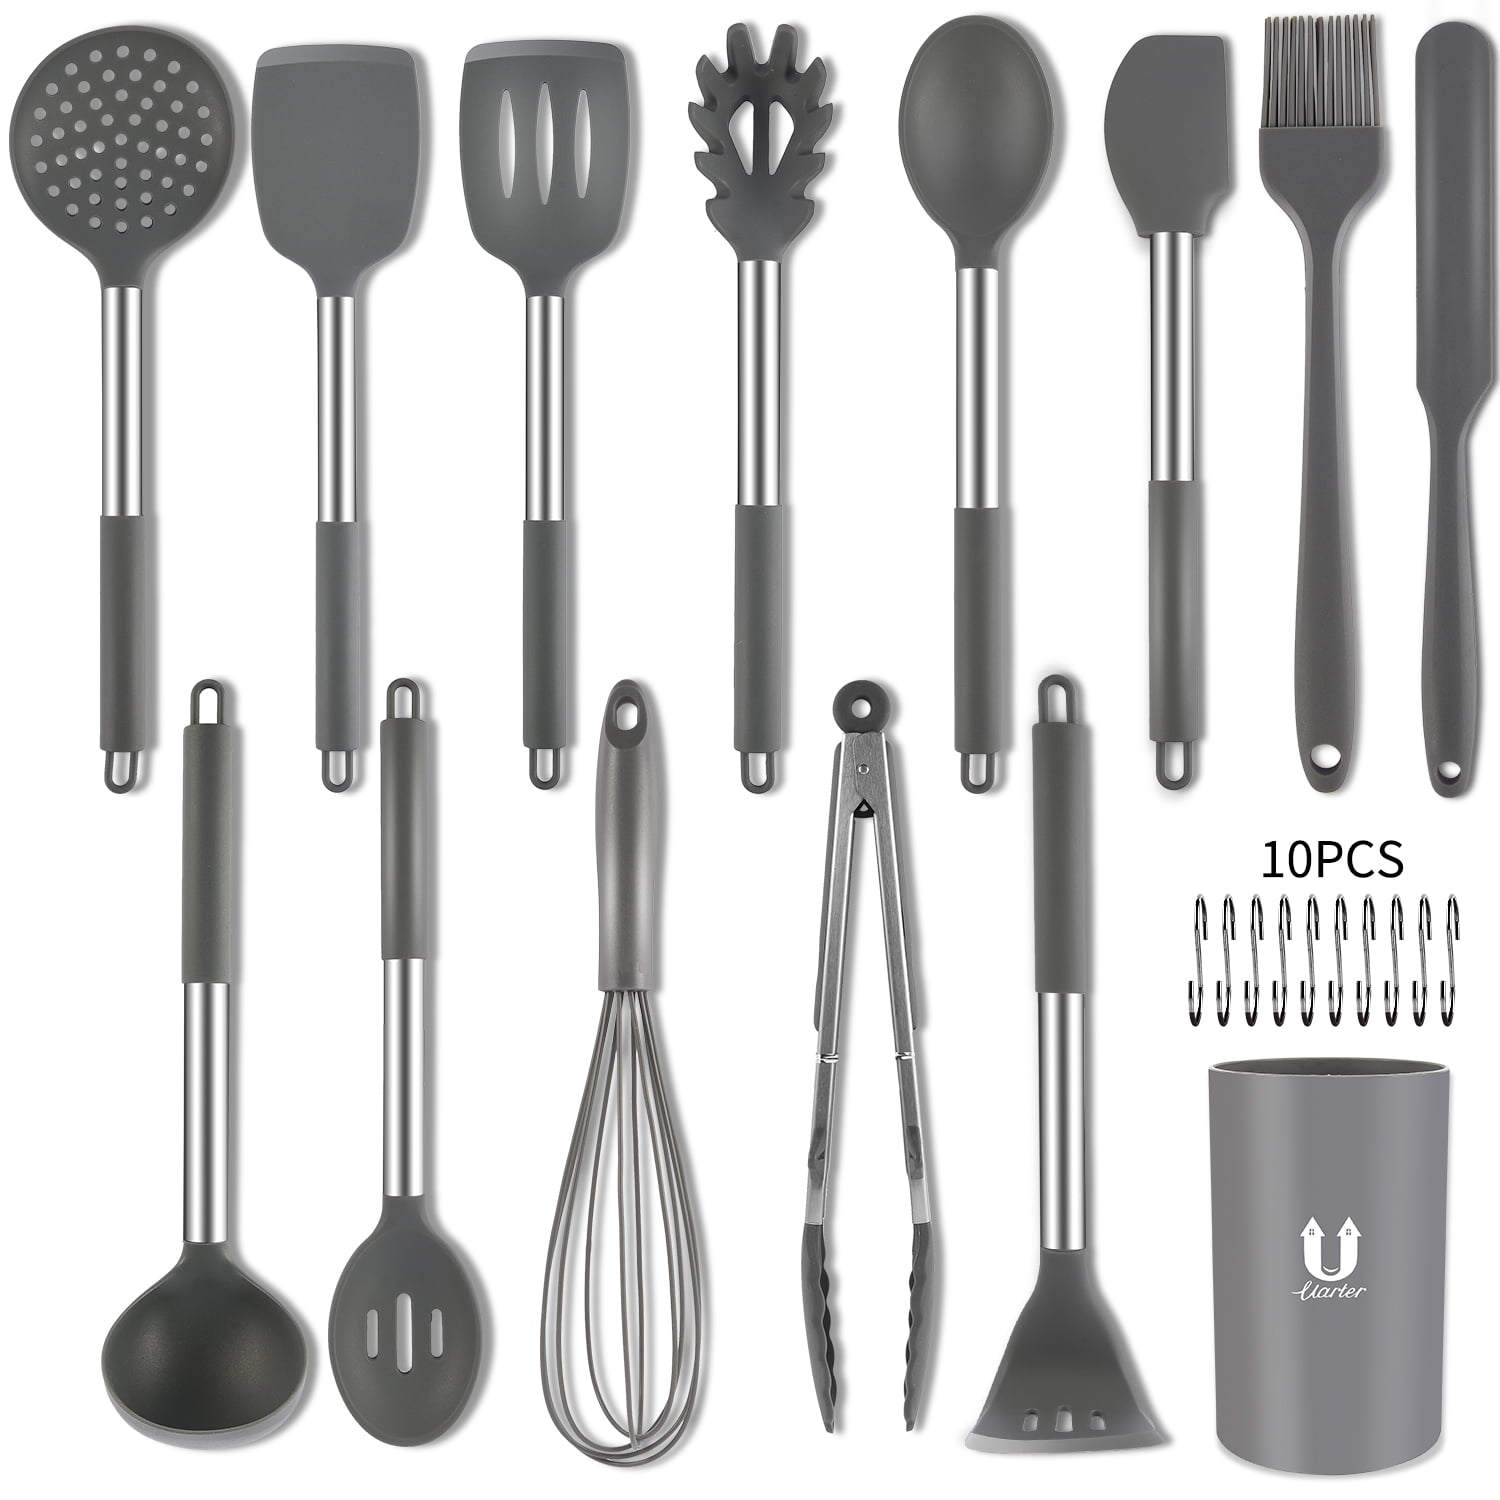 38+ Stainless steel kitchen utensil set canada